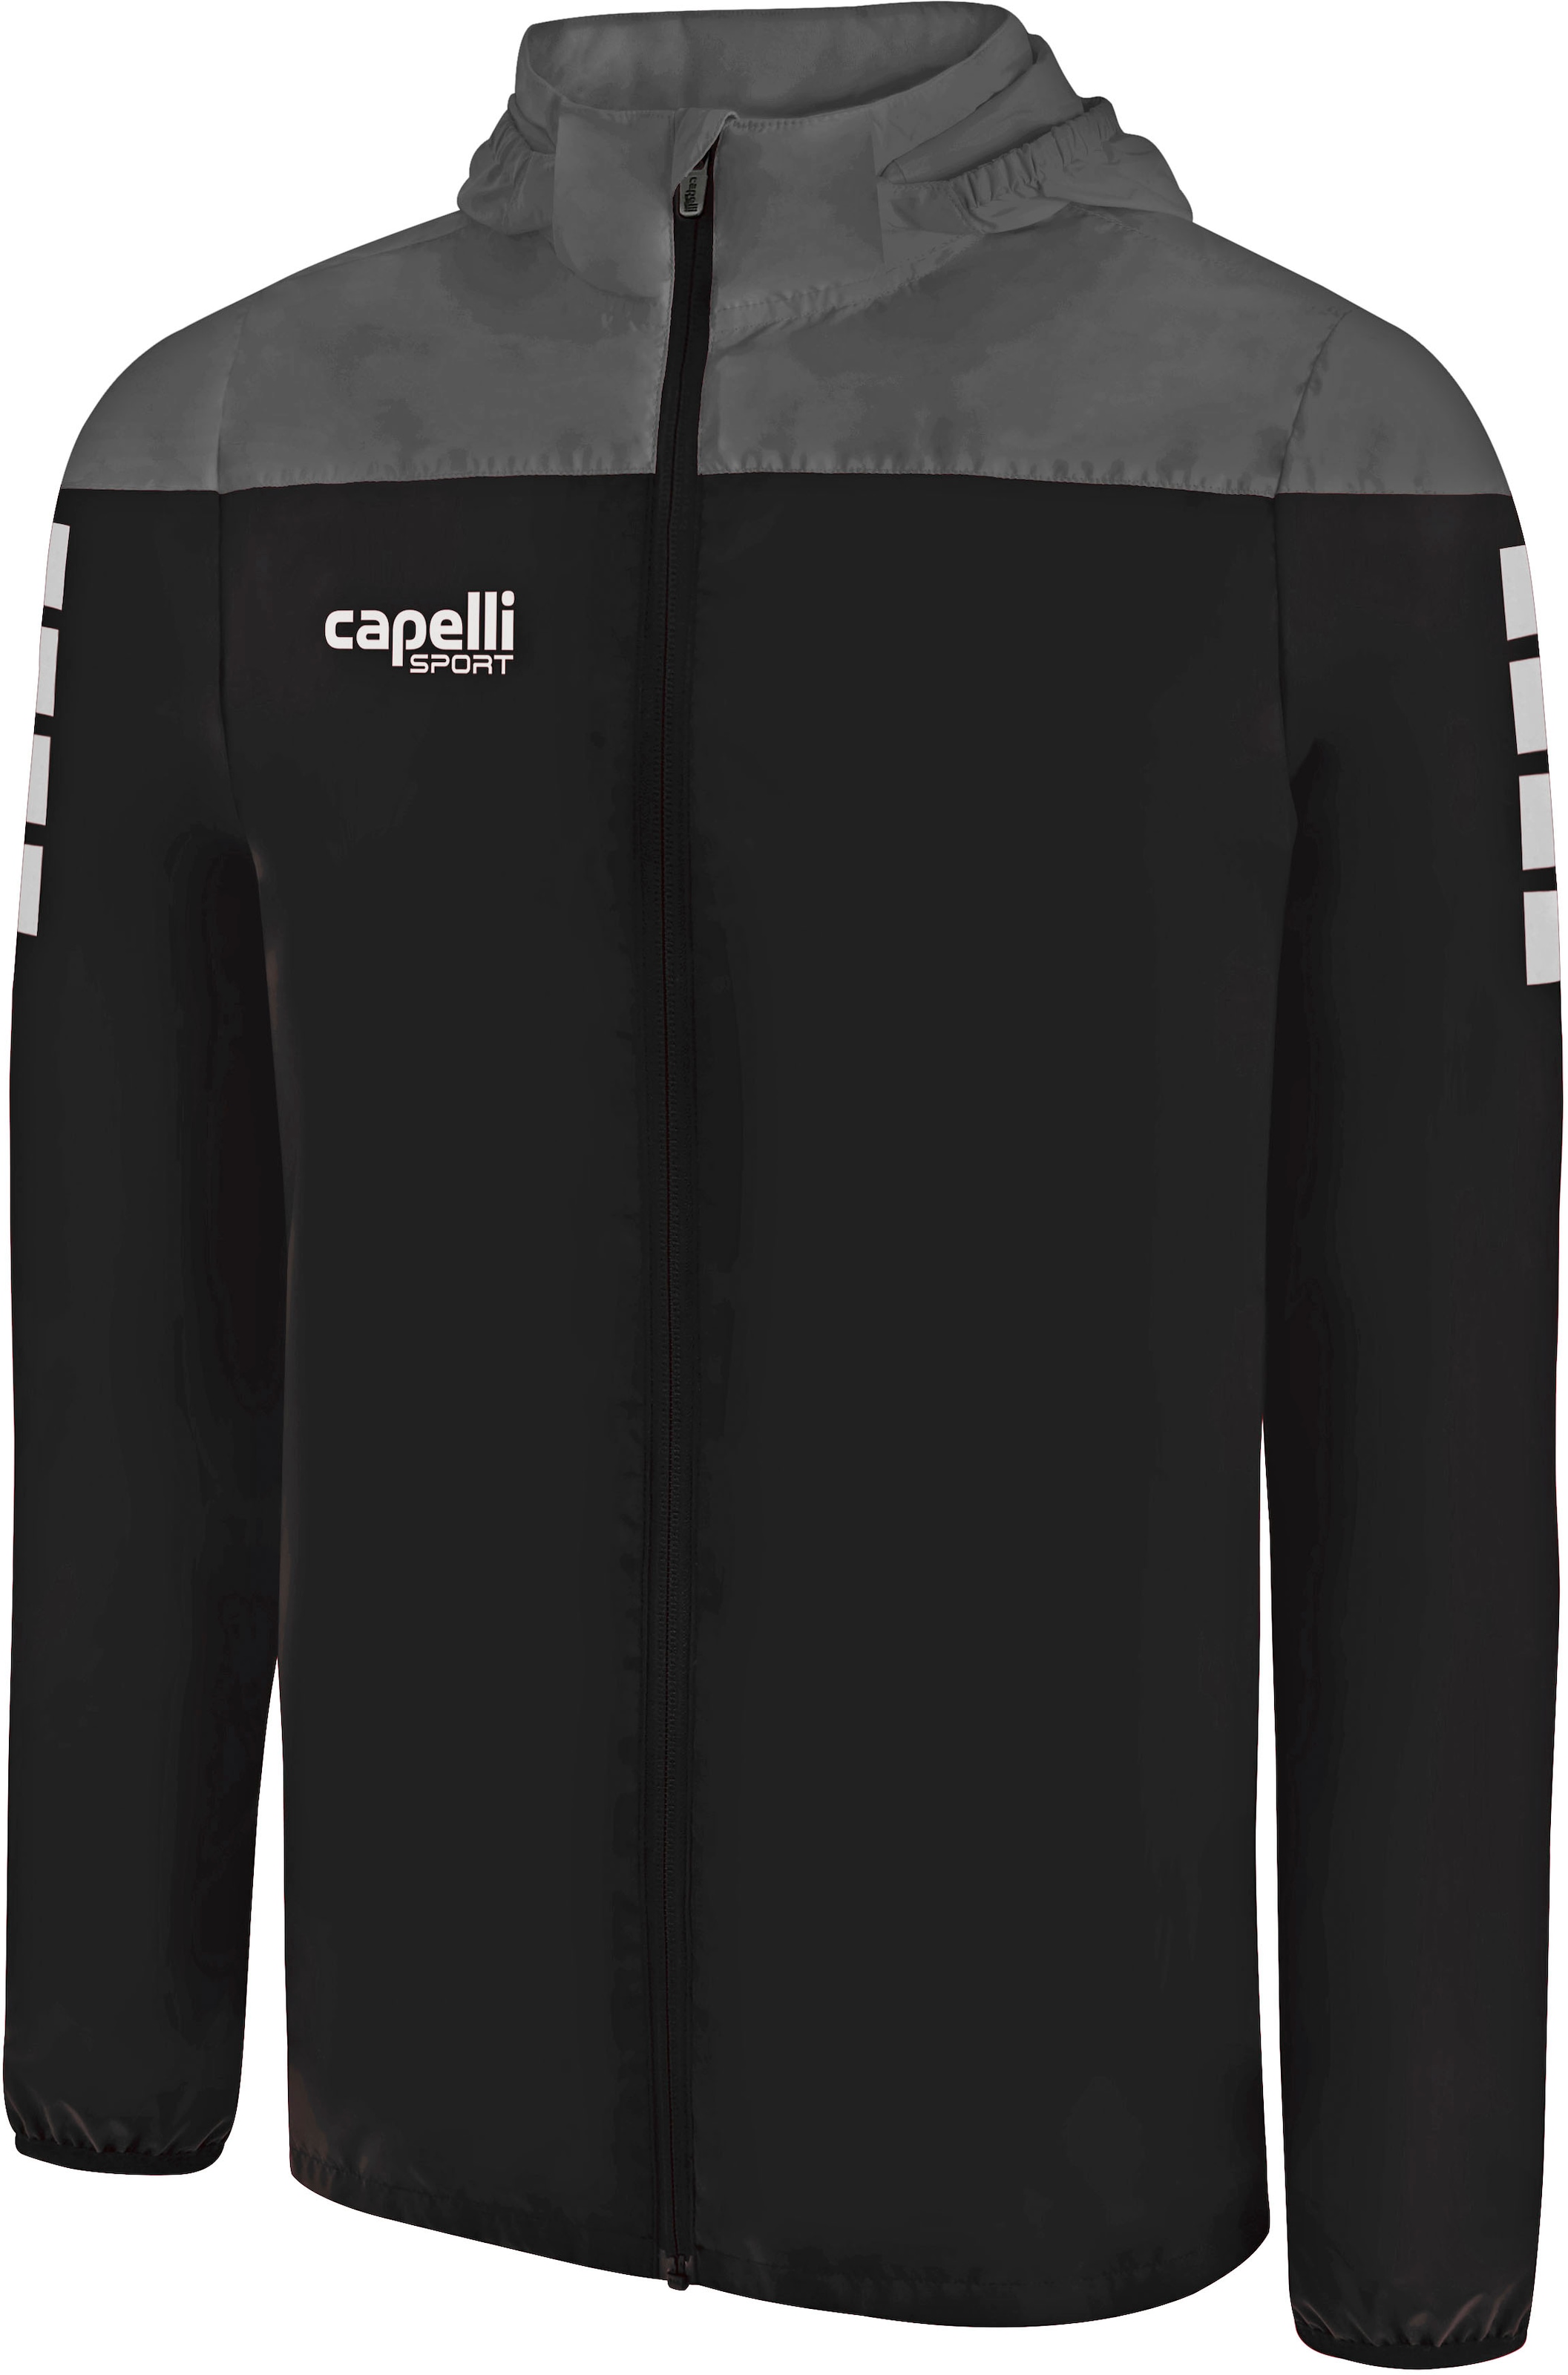 Capelli Sport Funktionsjacke, ohne Kapuze, mit Kontrastdetails